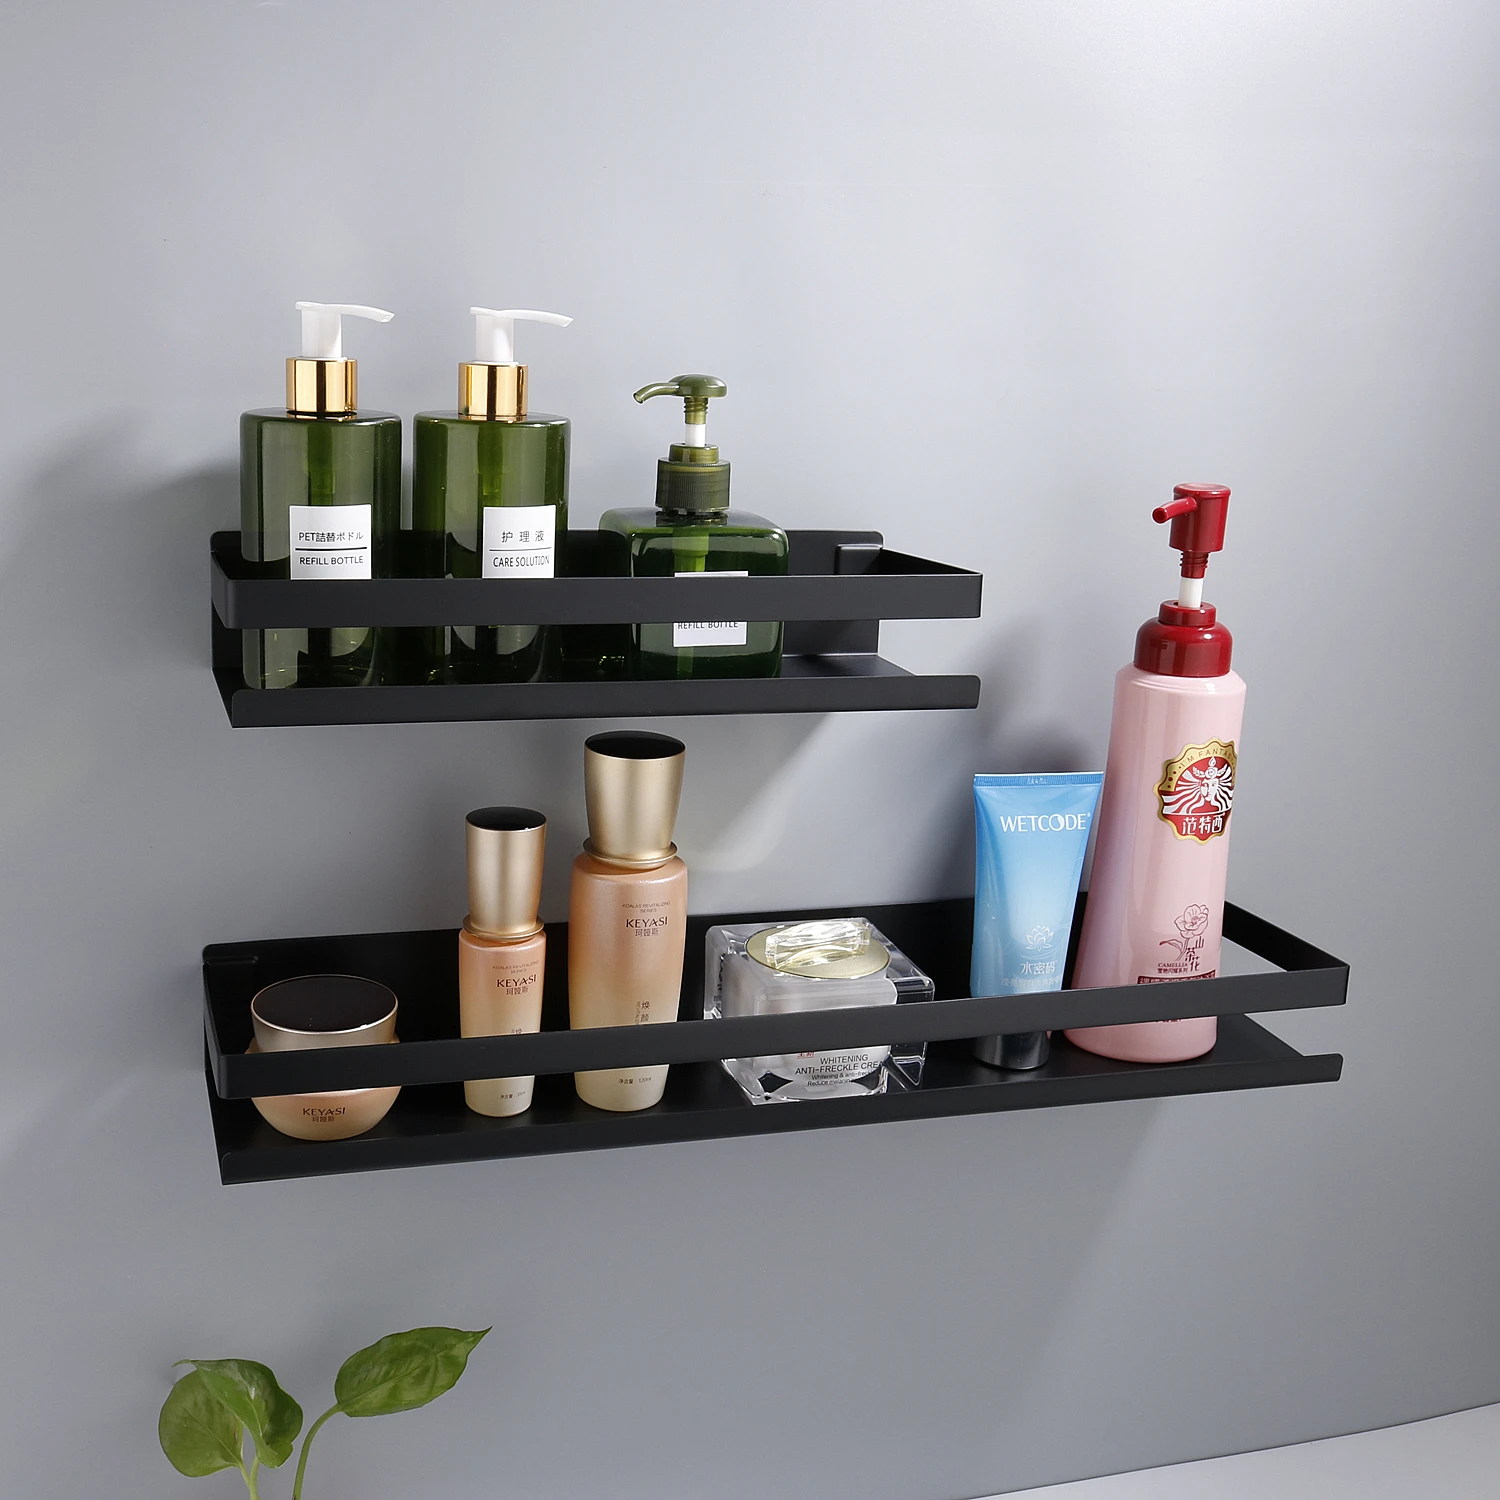 https://ae01.alicdn.com/kf/H1630f3af795741518dc455a1ce681ad0m/Bathroom-Hradware-Accessories-20-50cm-Modern-Matte-Black-Bathroom-Corner-Shelves-Kitchen-Wall-Shelf-Shower-Shampoo.jpg